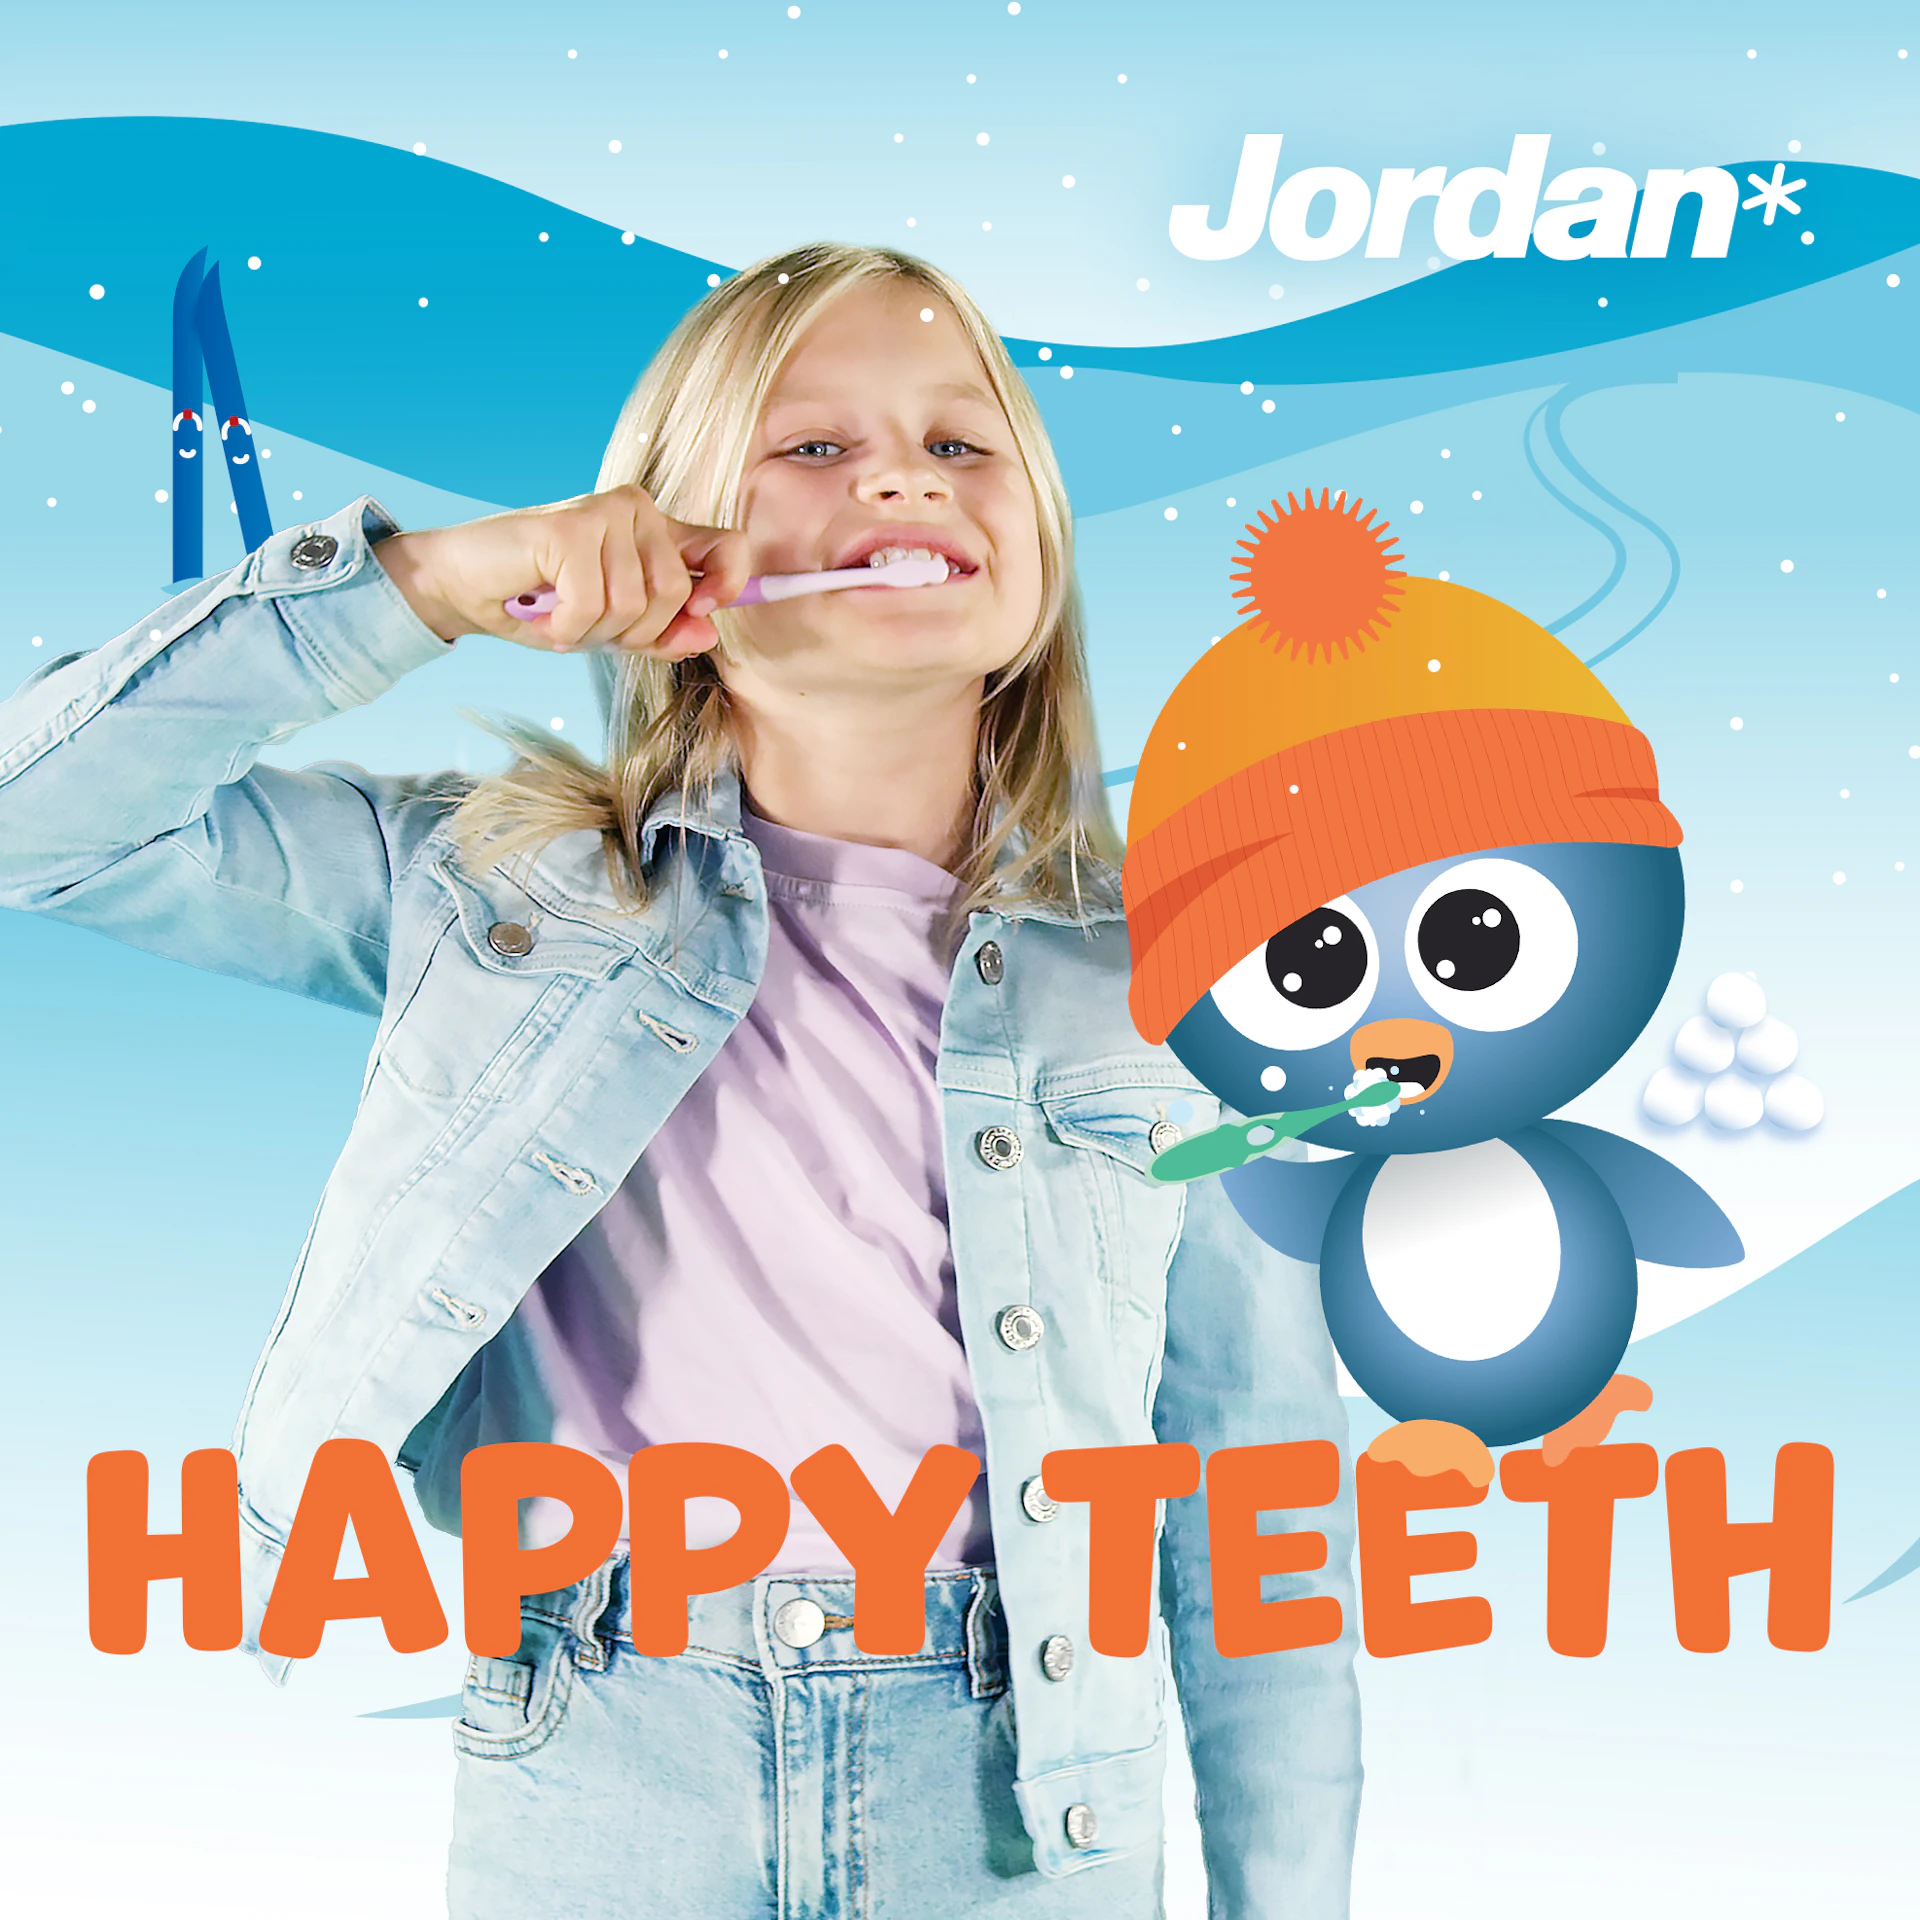 V Nvgw Eok Happy teeth coverart with Jordan logo